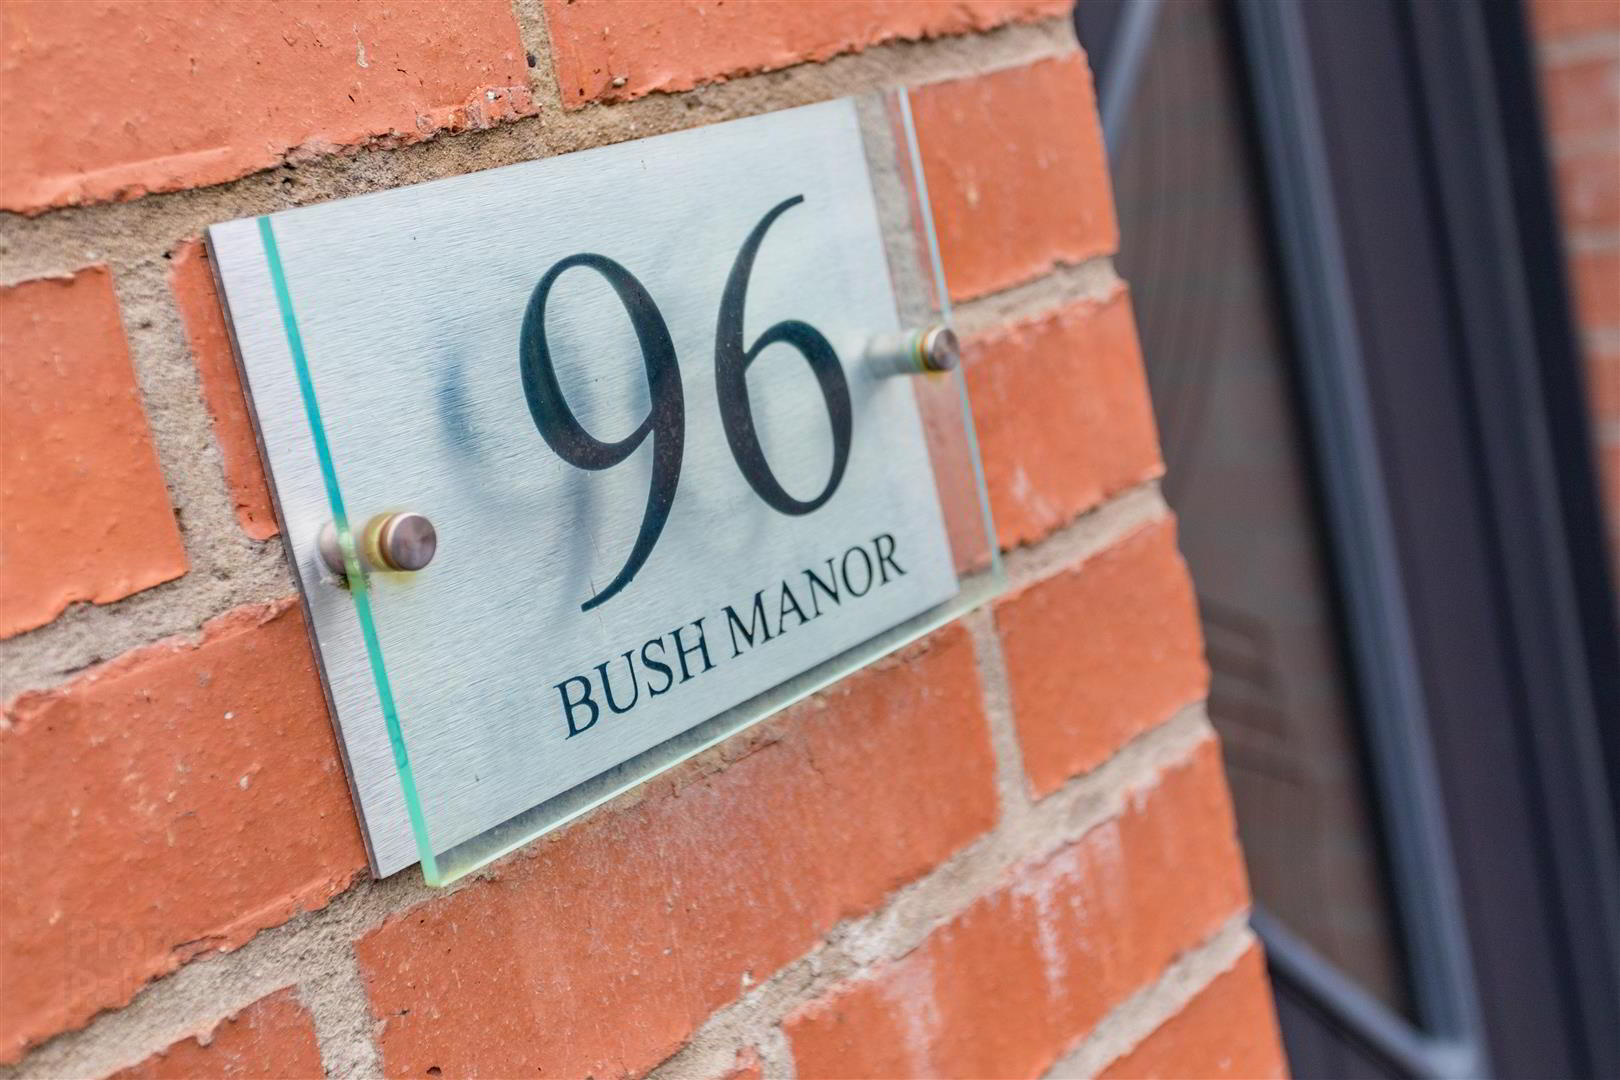 96 Bush Manor